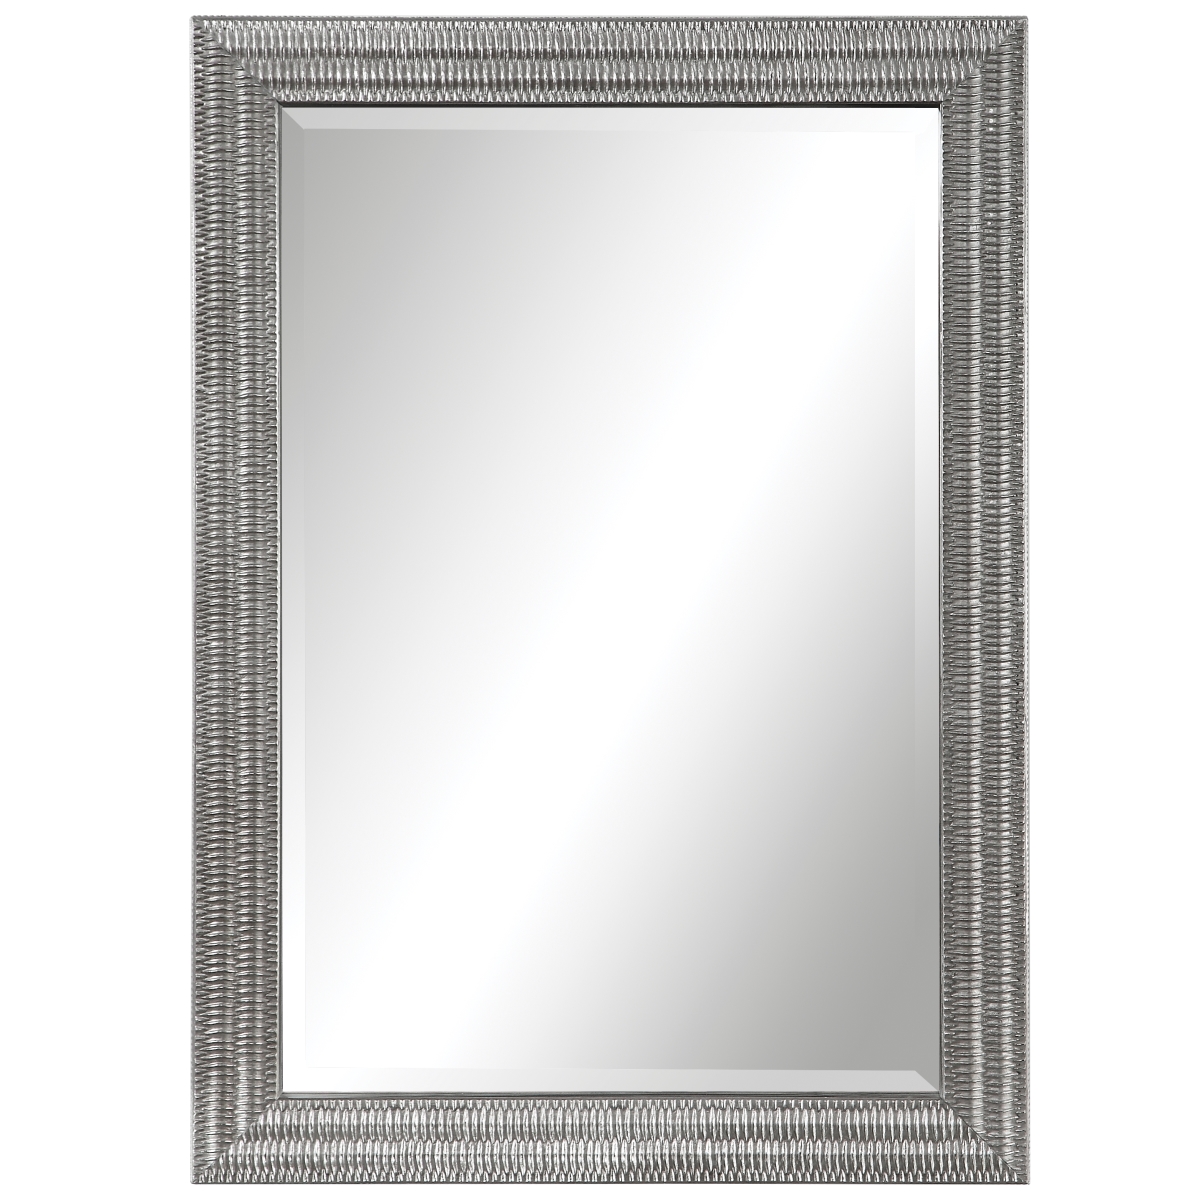 Picture of 212 Main 09581 Alwin Silver Mirror